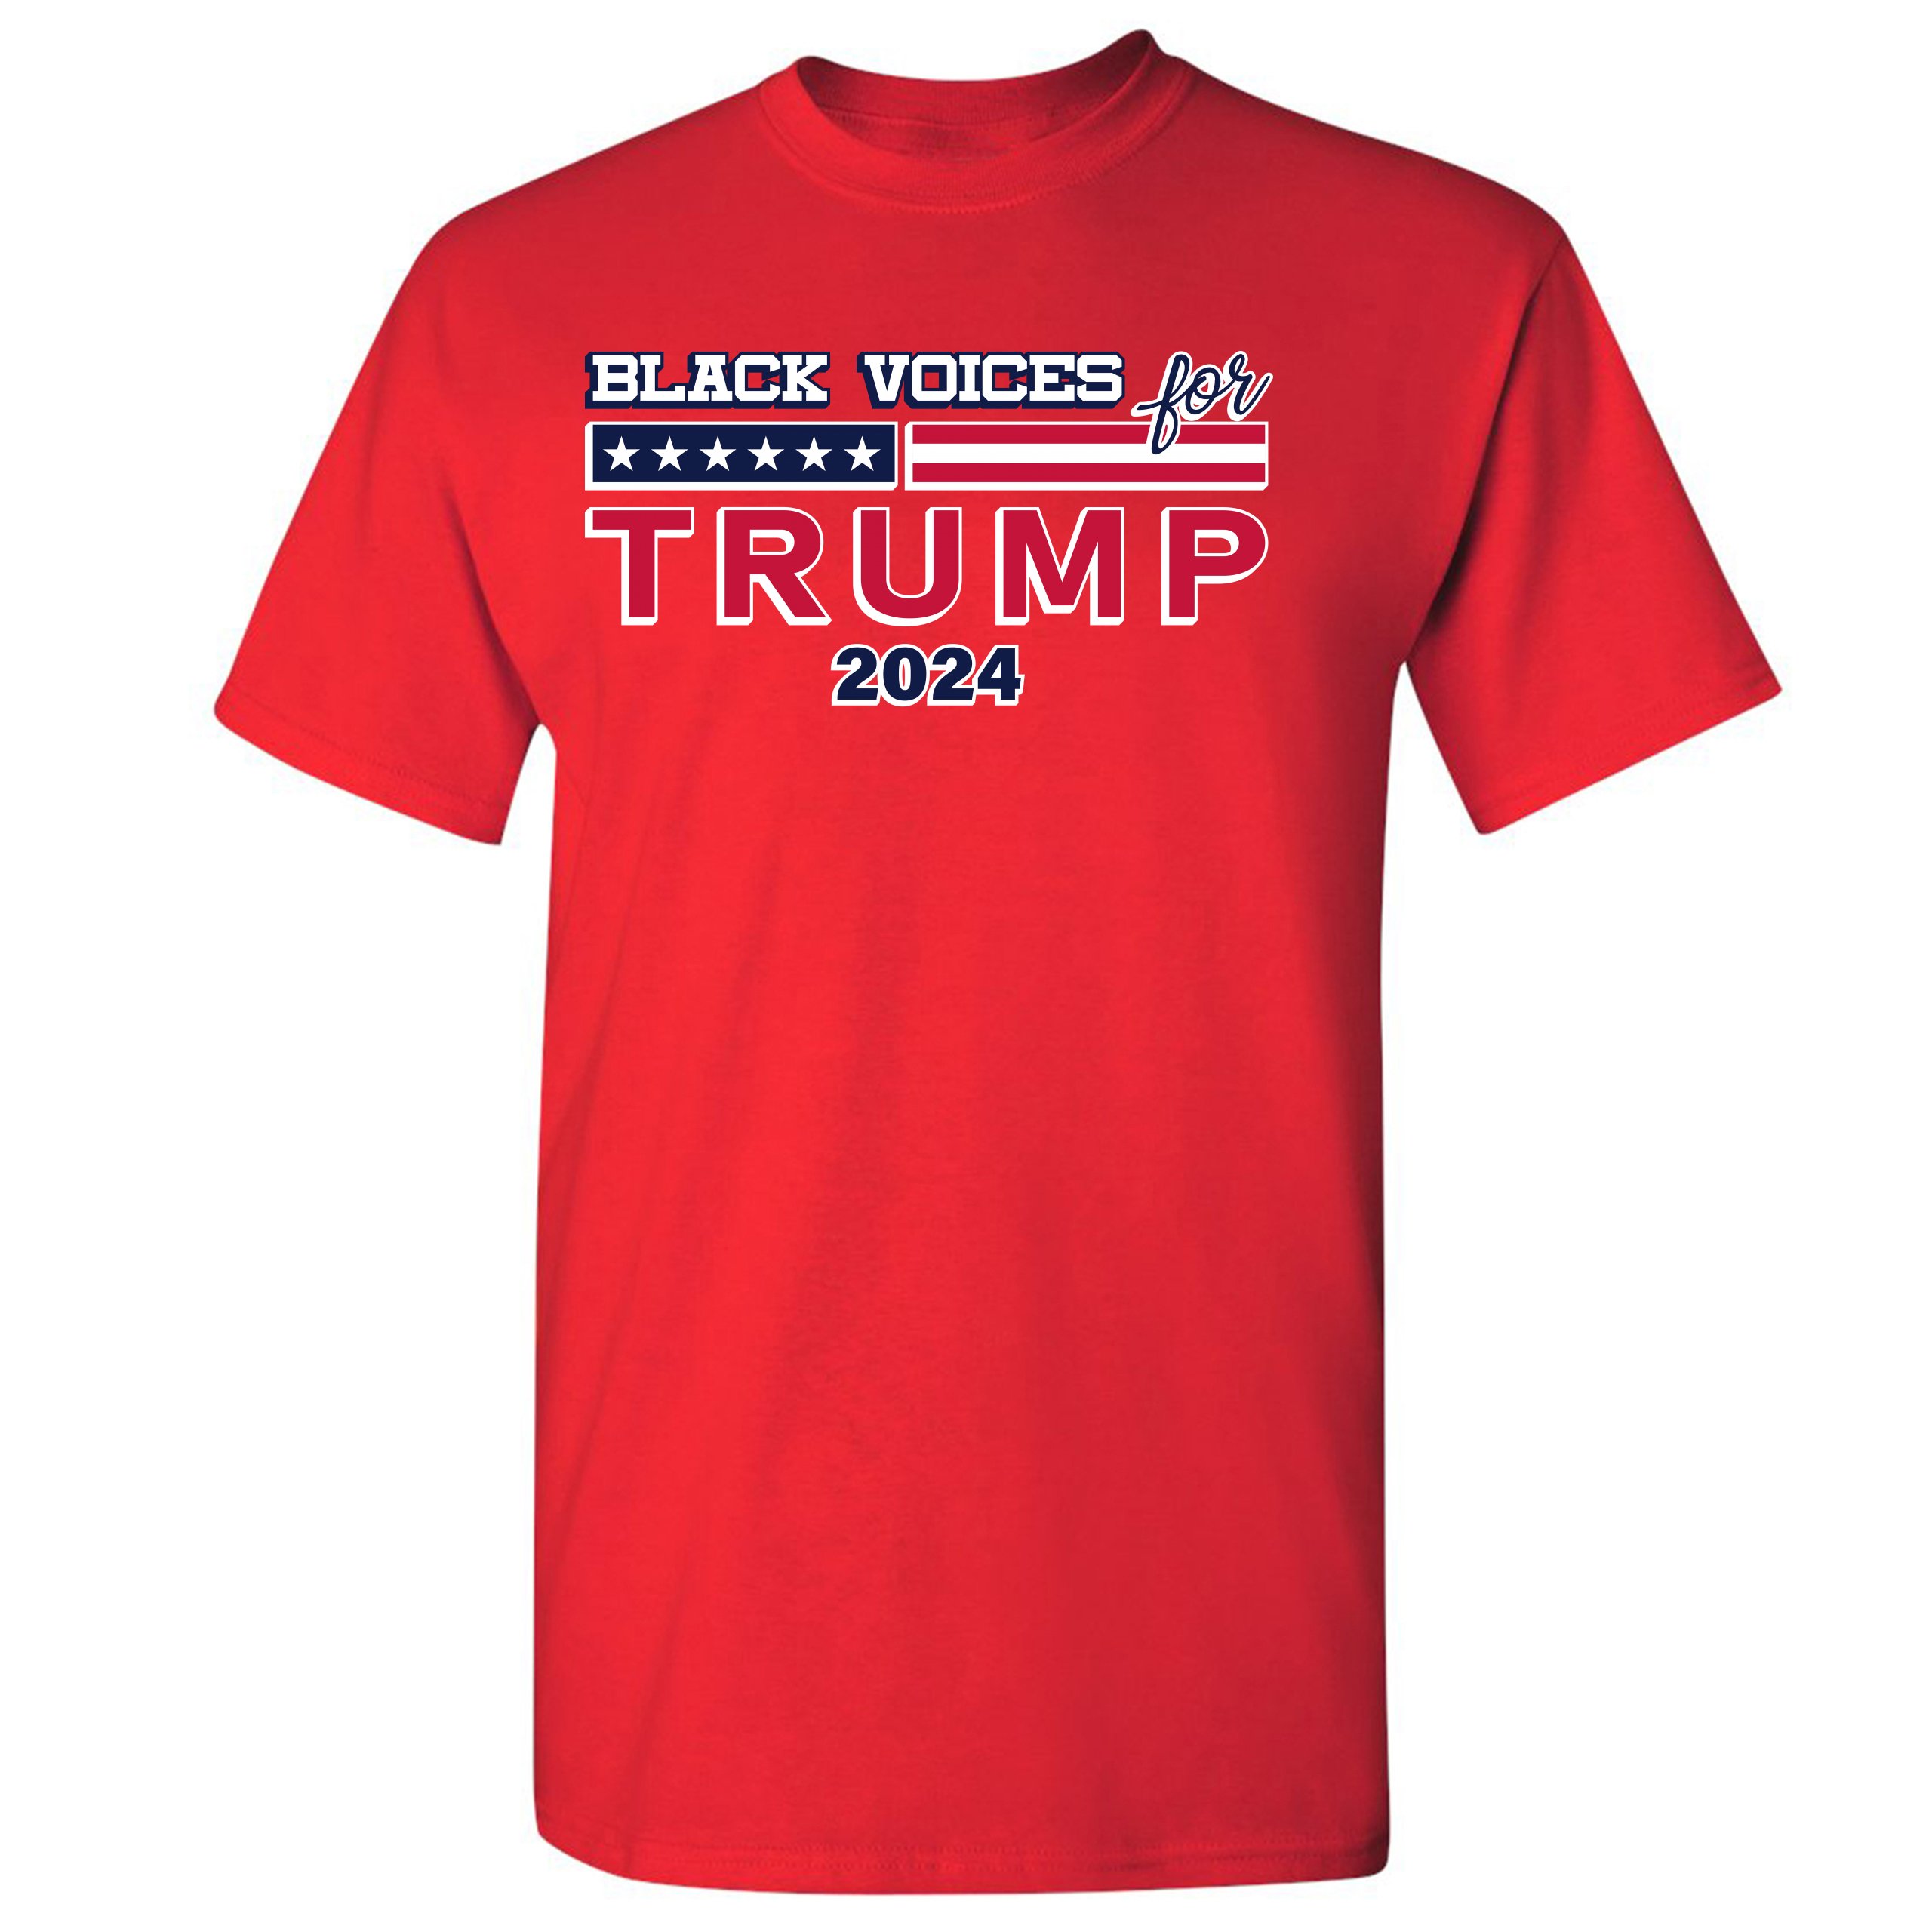 Black Voices For Trump Tshirt Donald Trump 2024 Stars and Stripes Men